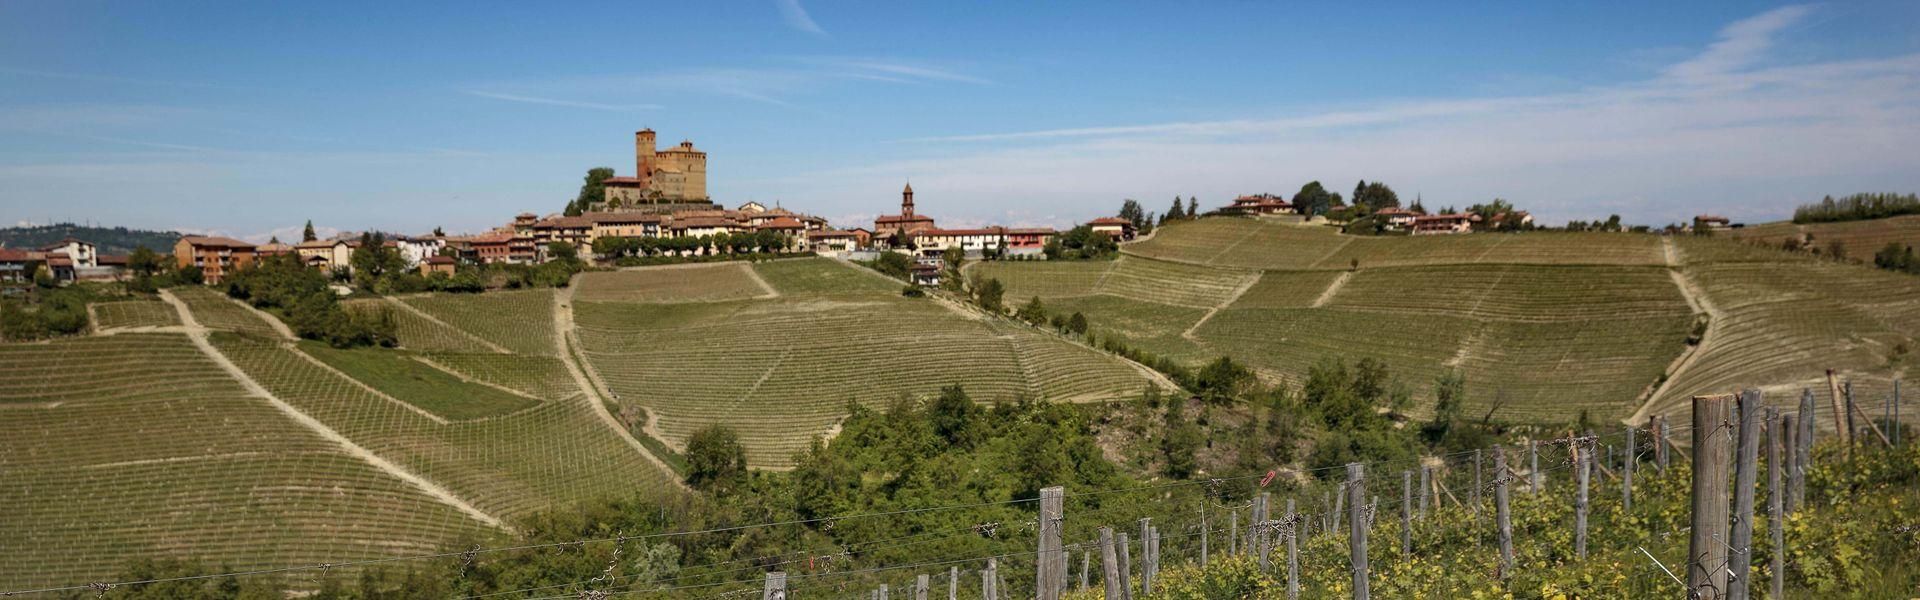 Serralunga d'Alba, vineyard Rivetto